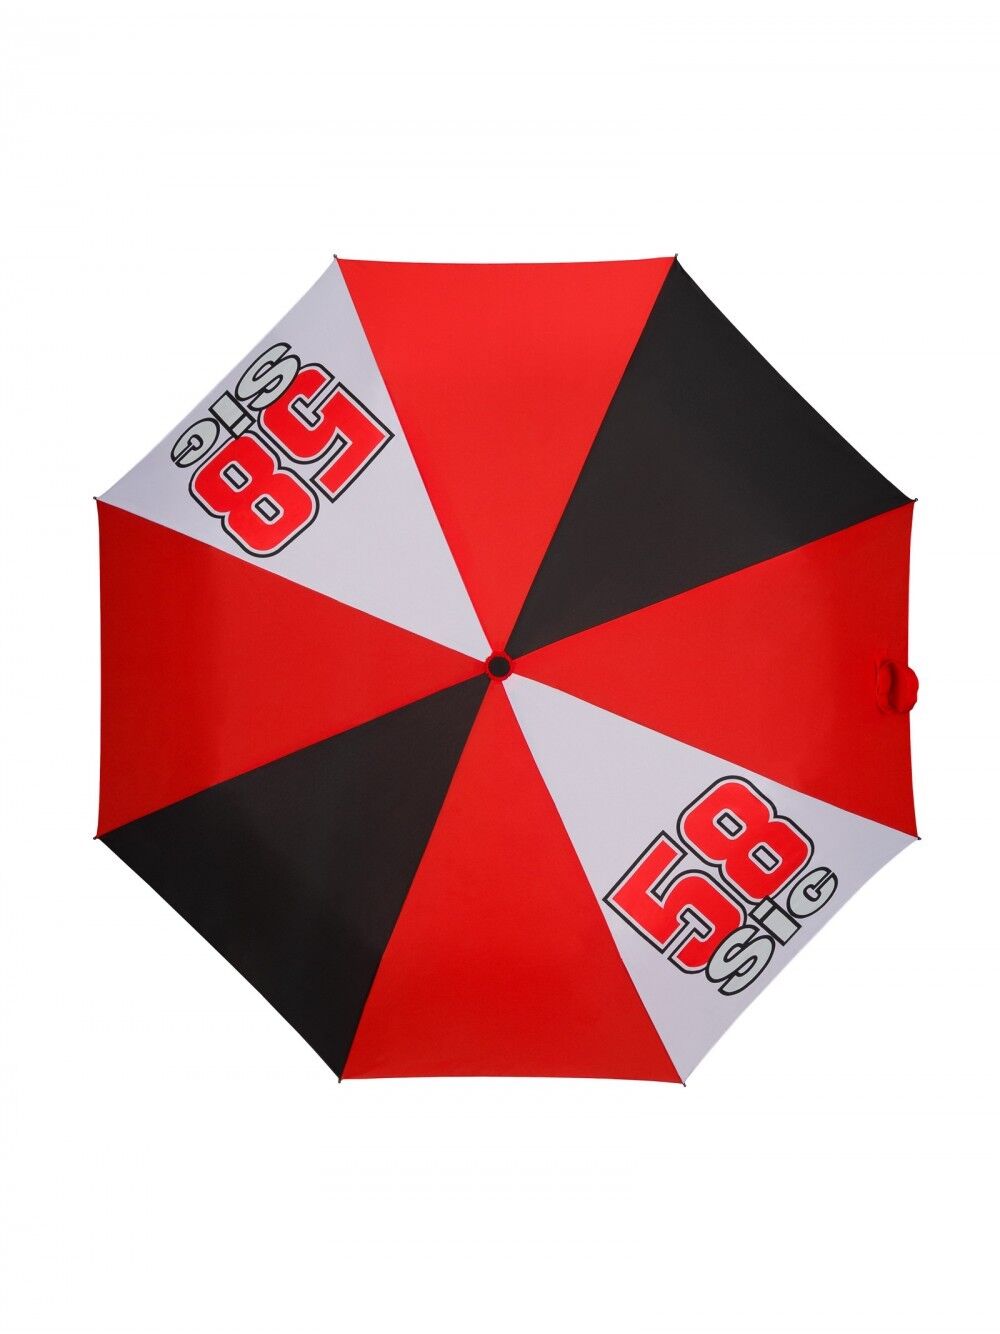 New Official Marco Simocelli Pocket Umbrella - 18 55001